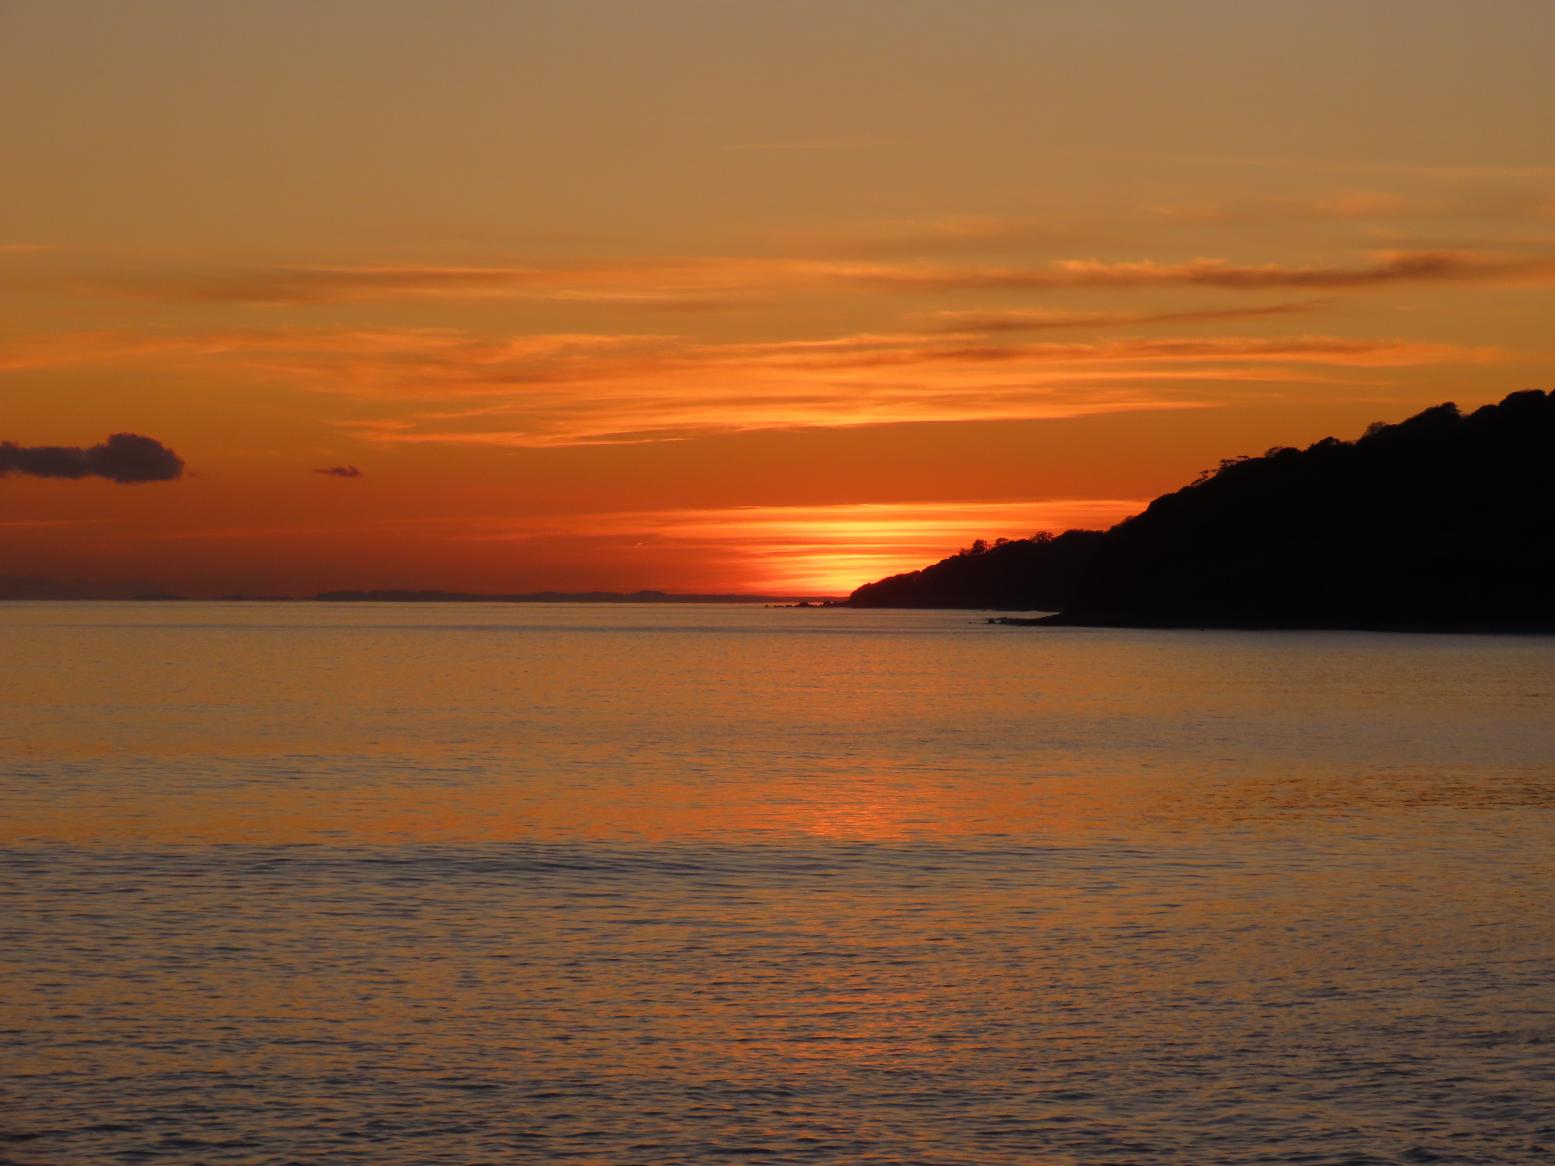 Sunset from the Cobb, Lyme Regis